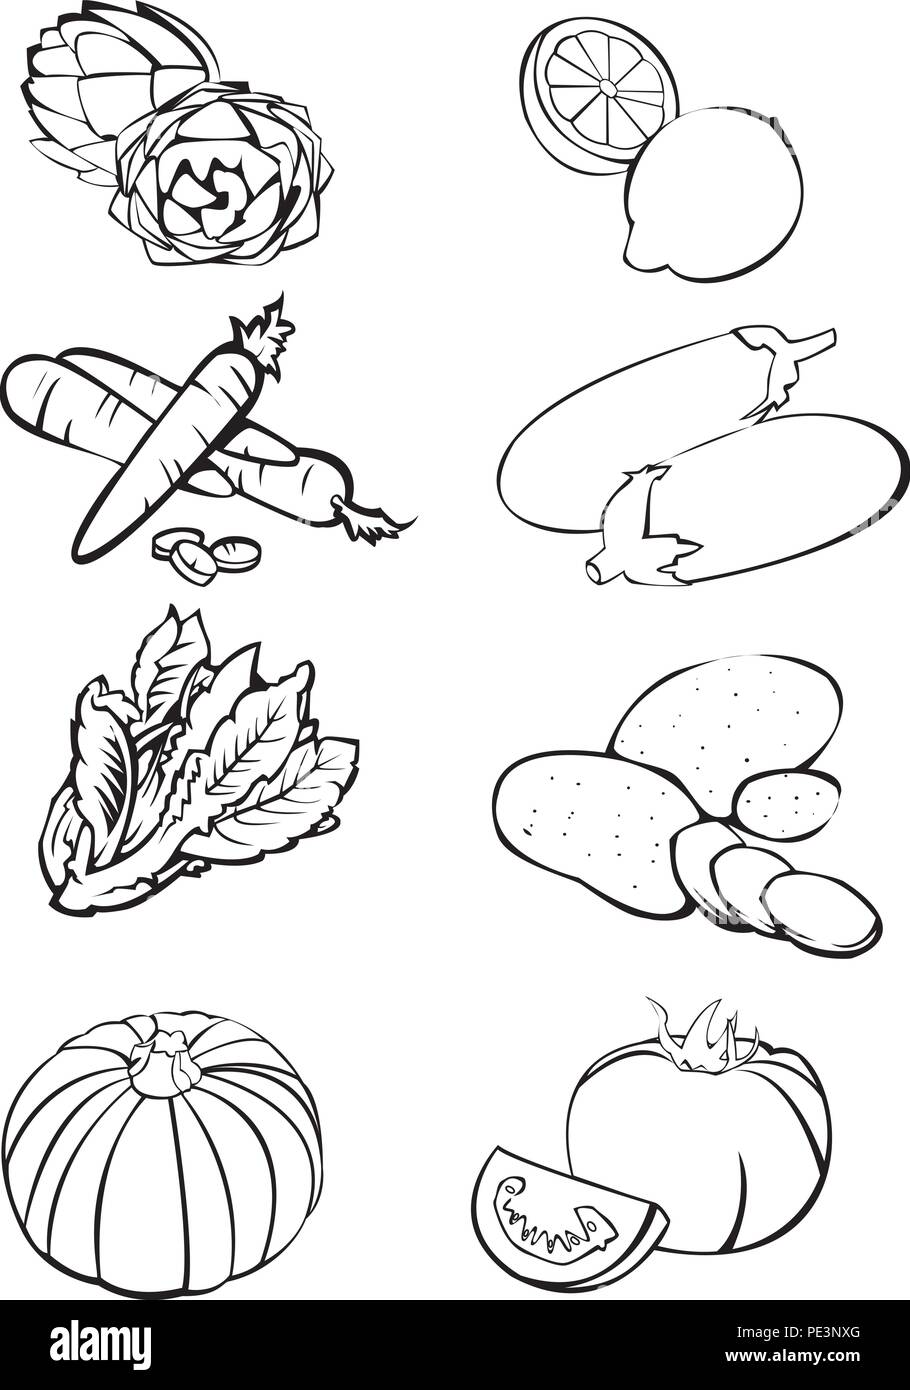 Black and white illustration of eight vegetables: artichokes - lemons - carrots - eggplants - lettuce - potatoes - pumpkin - tomatoes Stock Vector